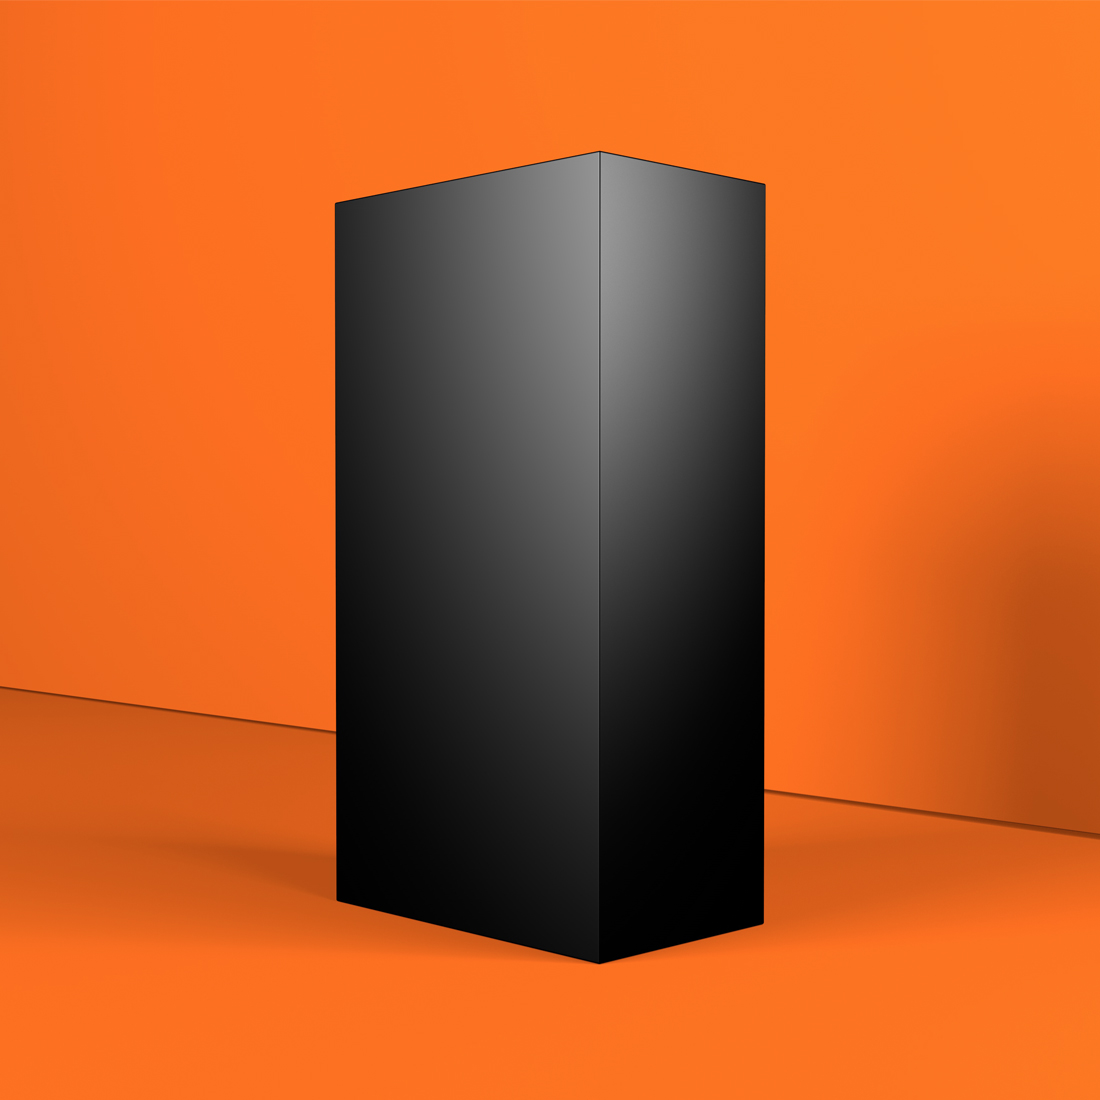 Black box sitting on top of an orange floor.